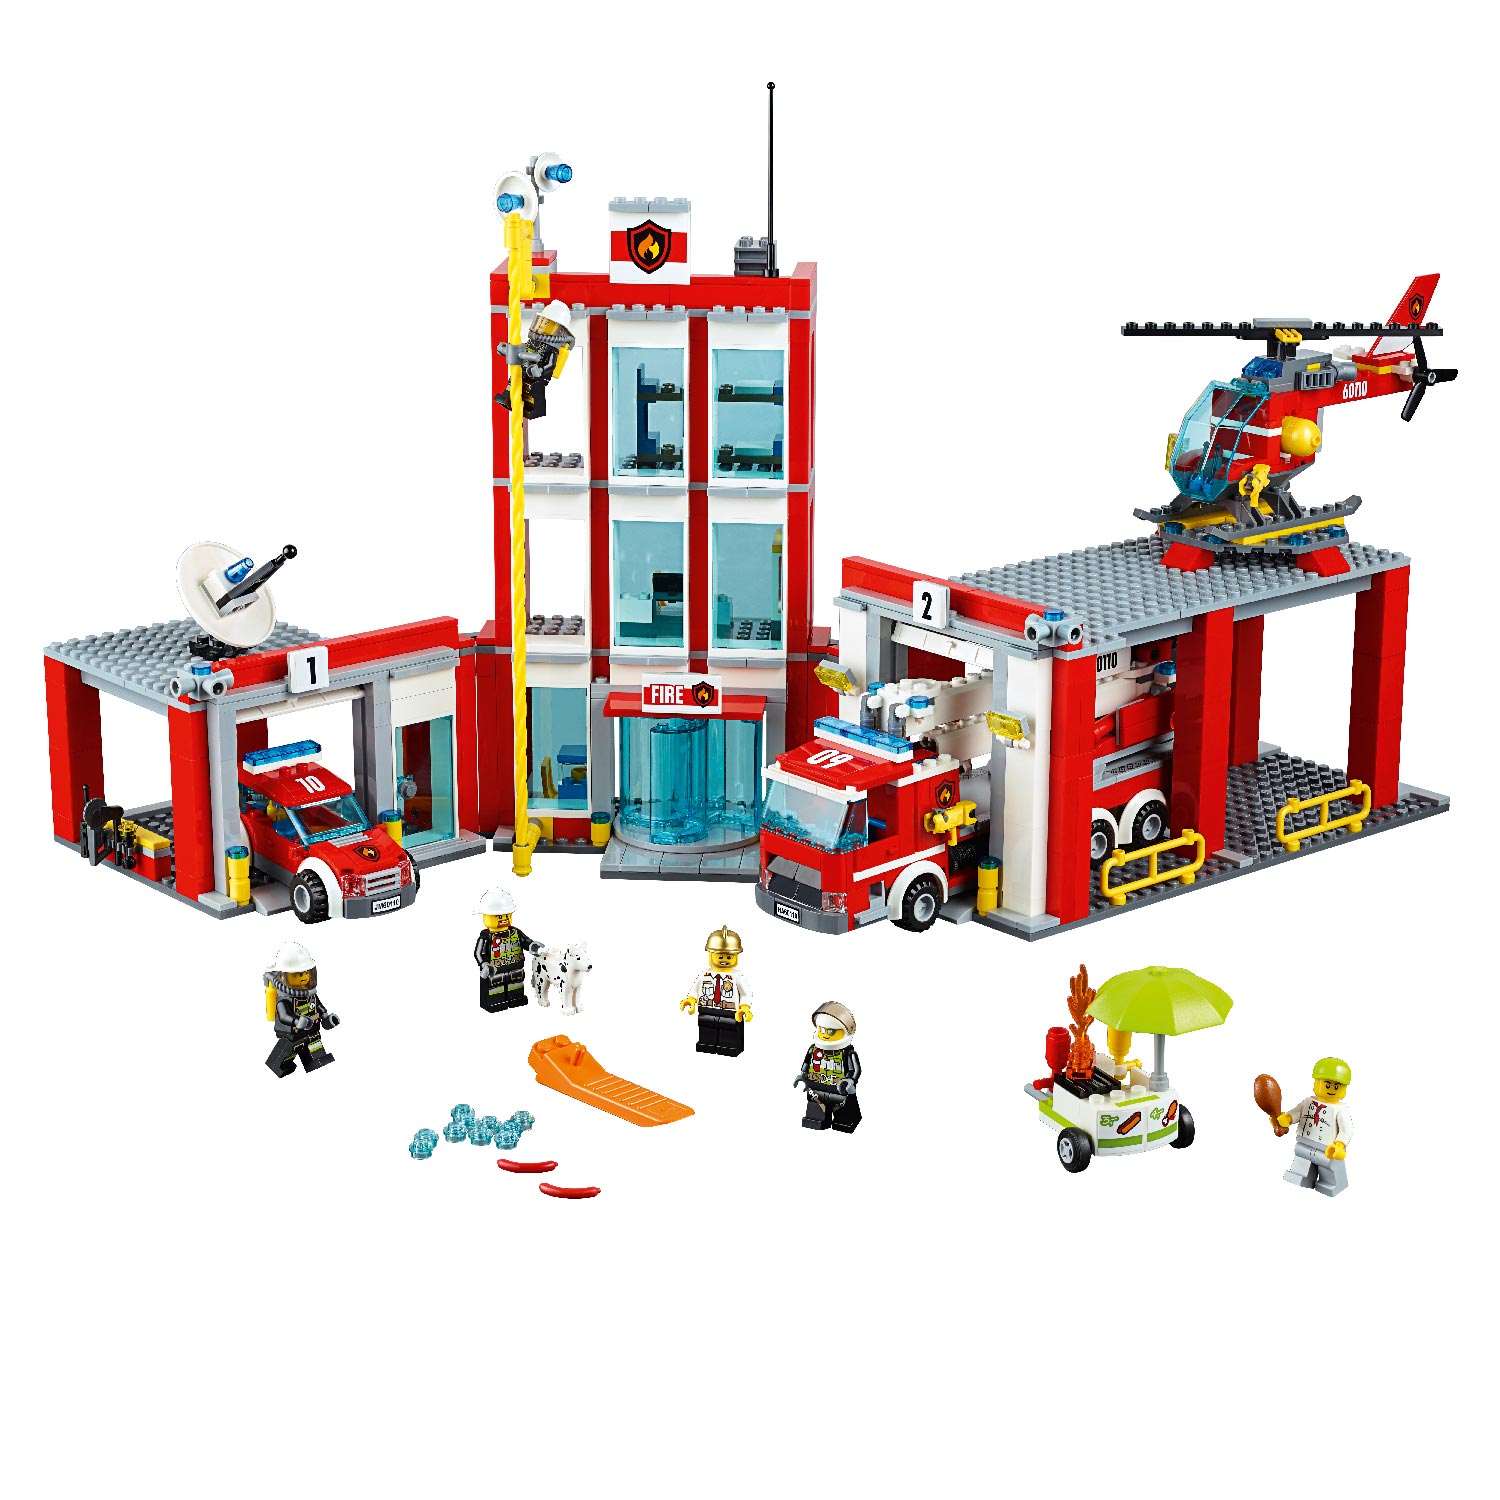 LEGO City 60110 Brandweerkazerne